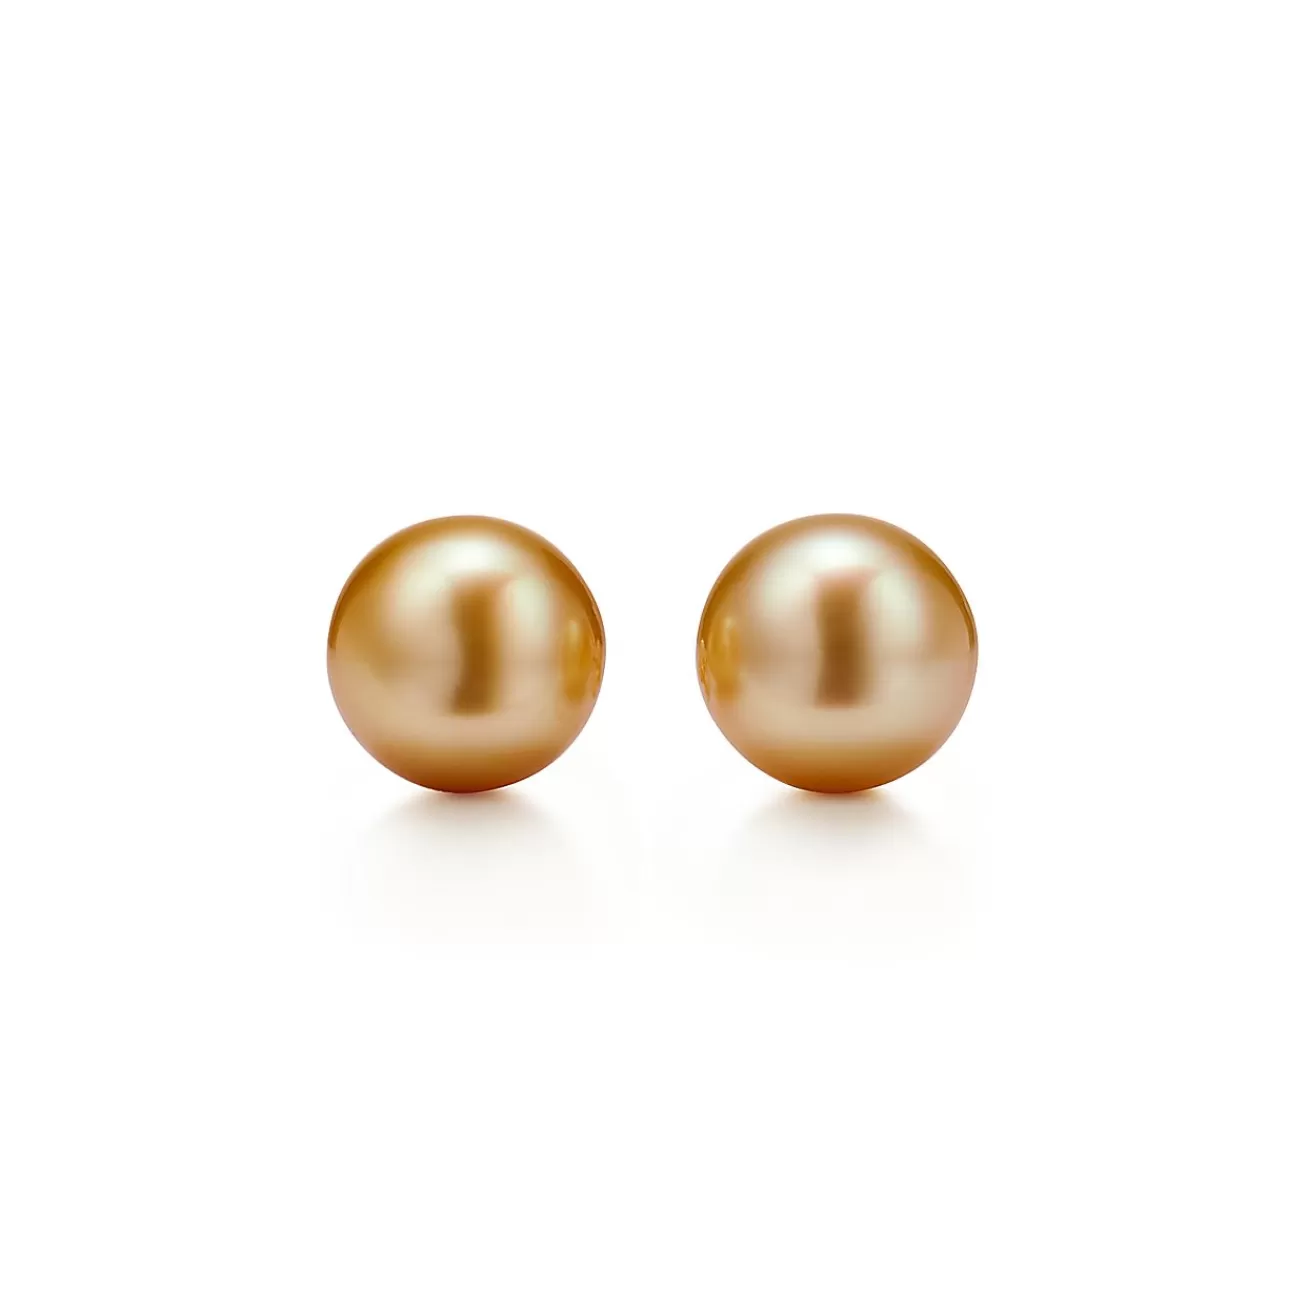 Tiffany & Co. Tiffany South Sea pearl earrings with 18k gold. | ^ Earrings | Gold Jewelry